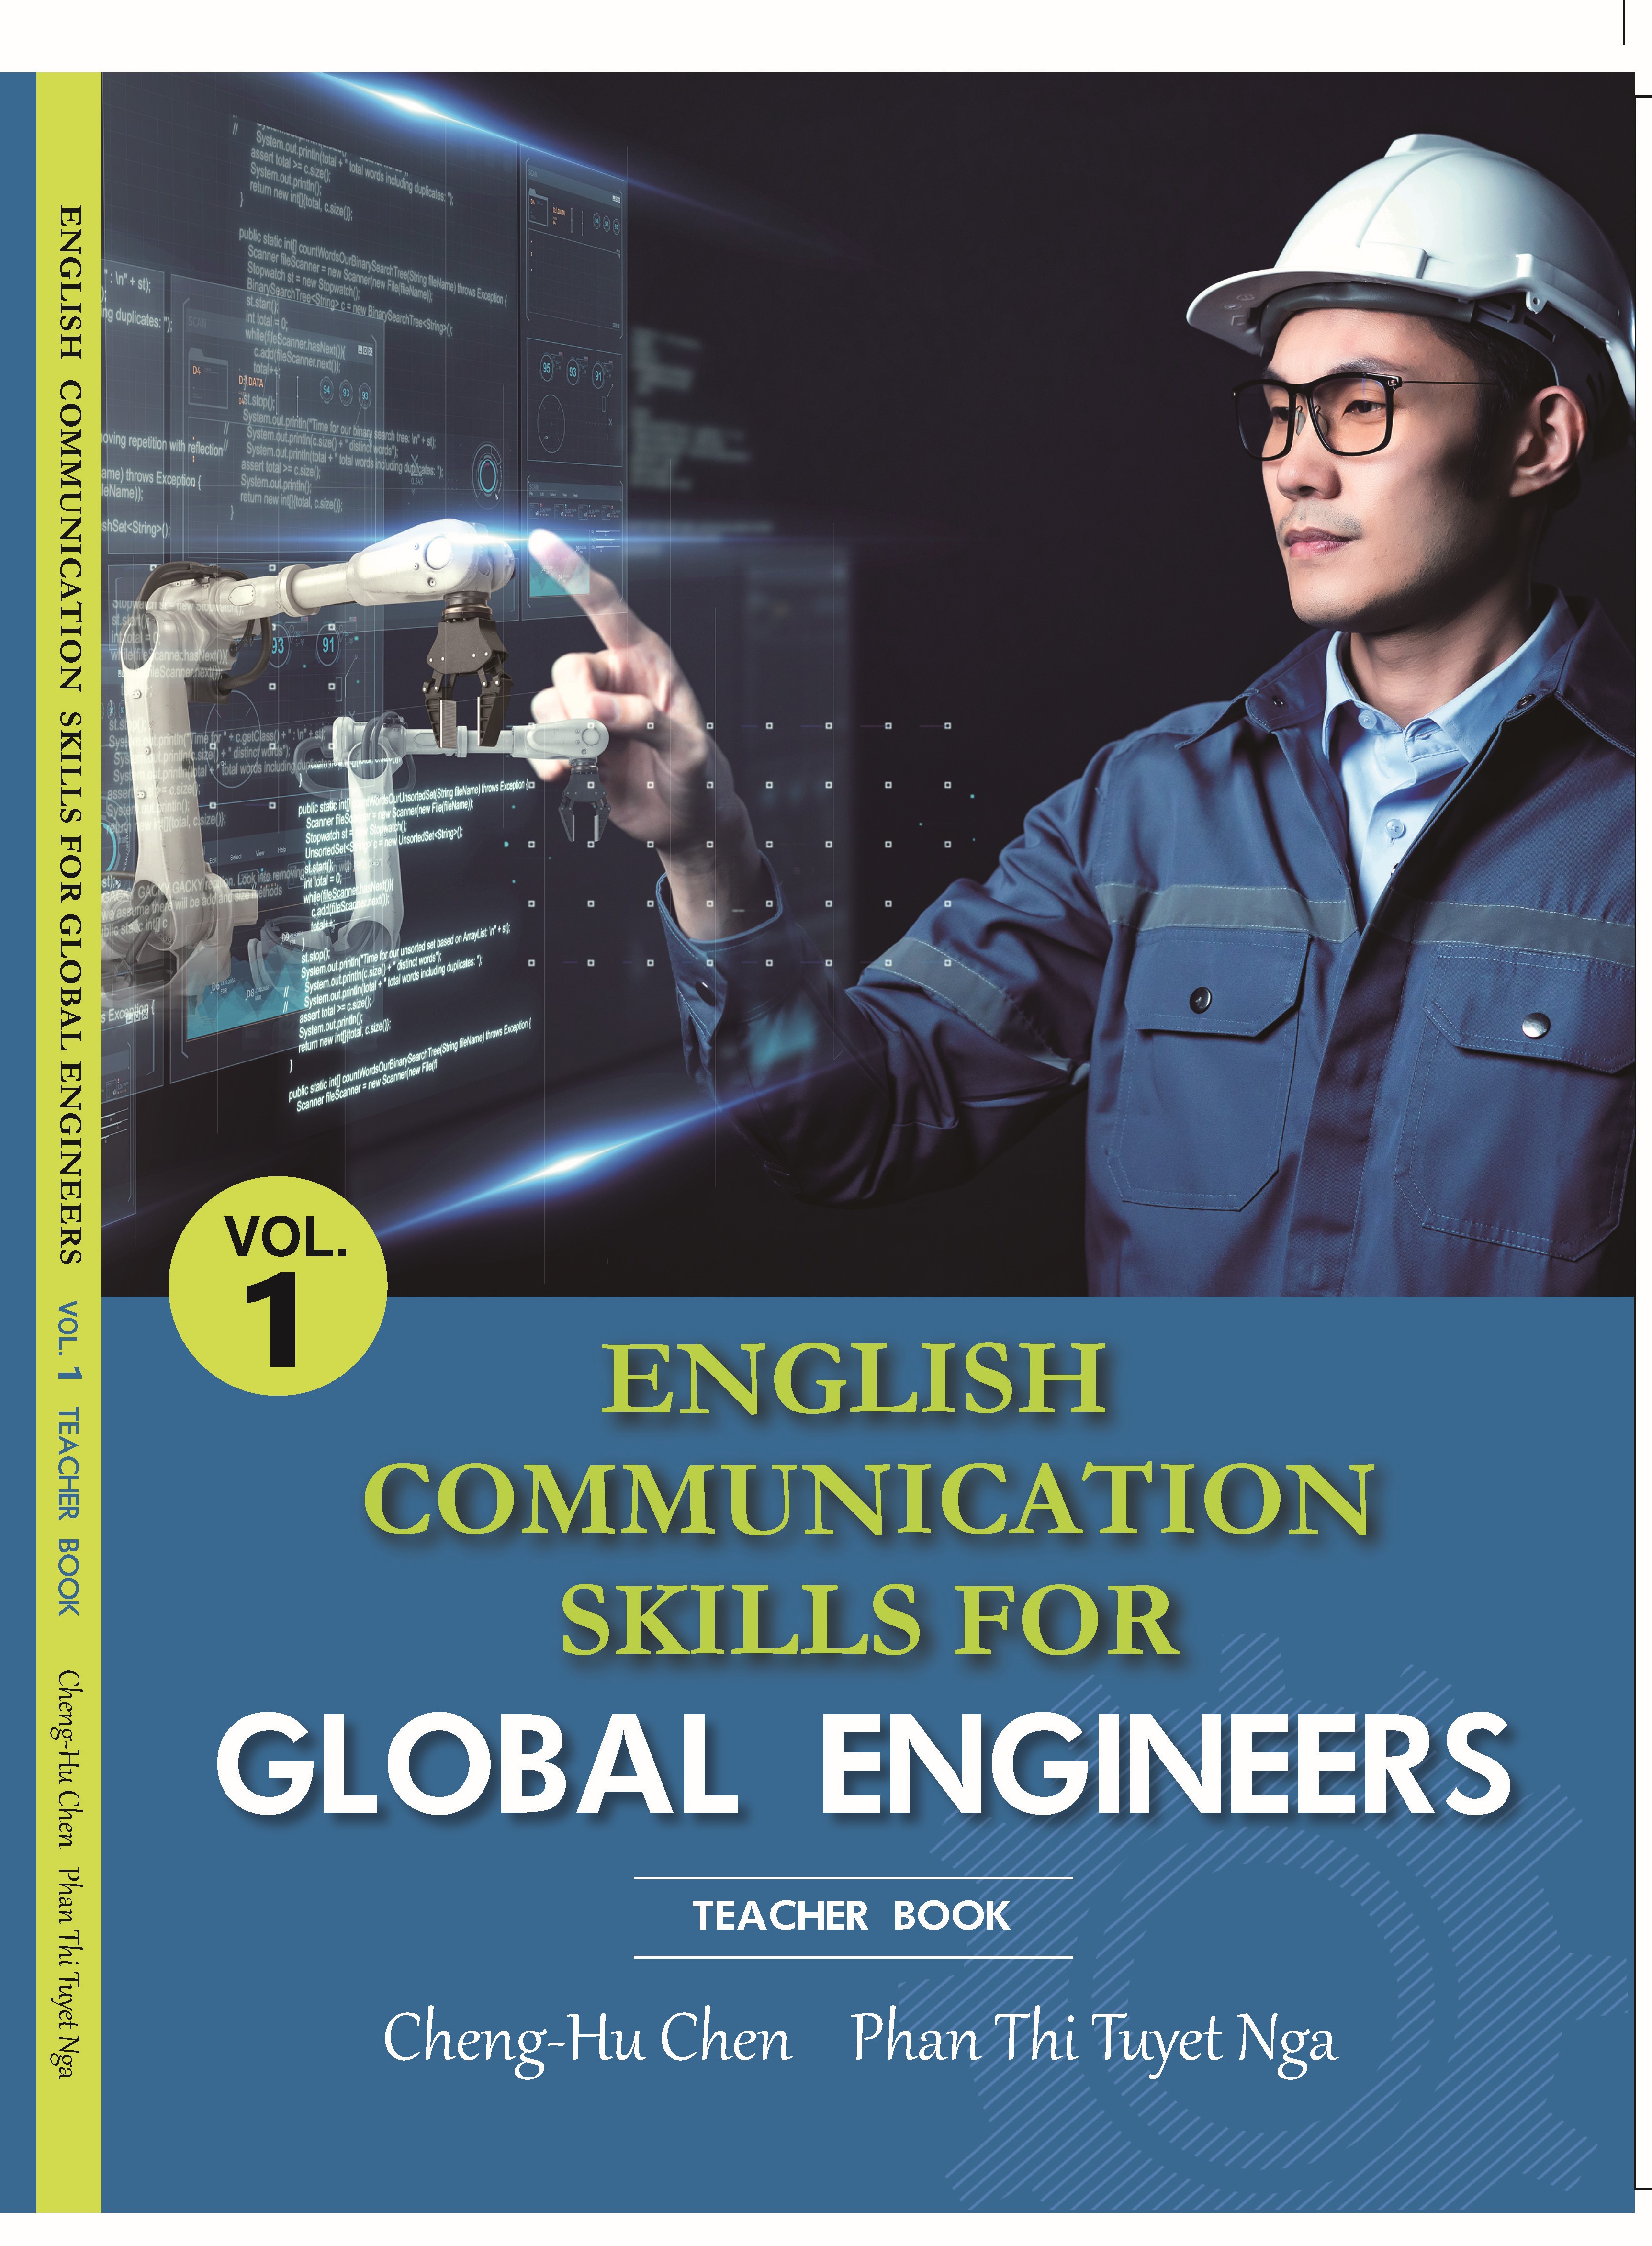 English communication skills for global engineers, Teacher book, Vol.1